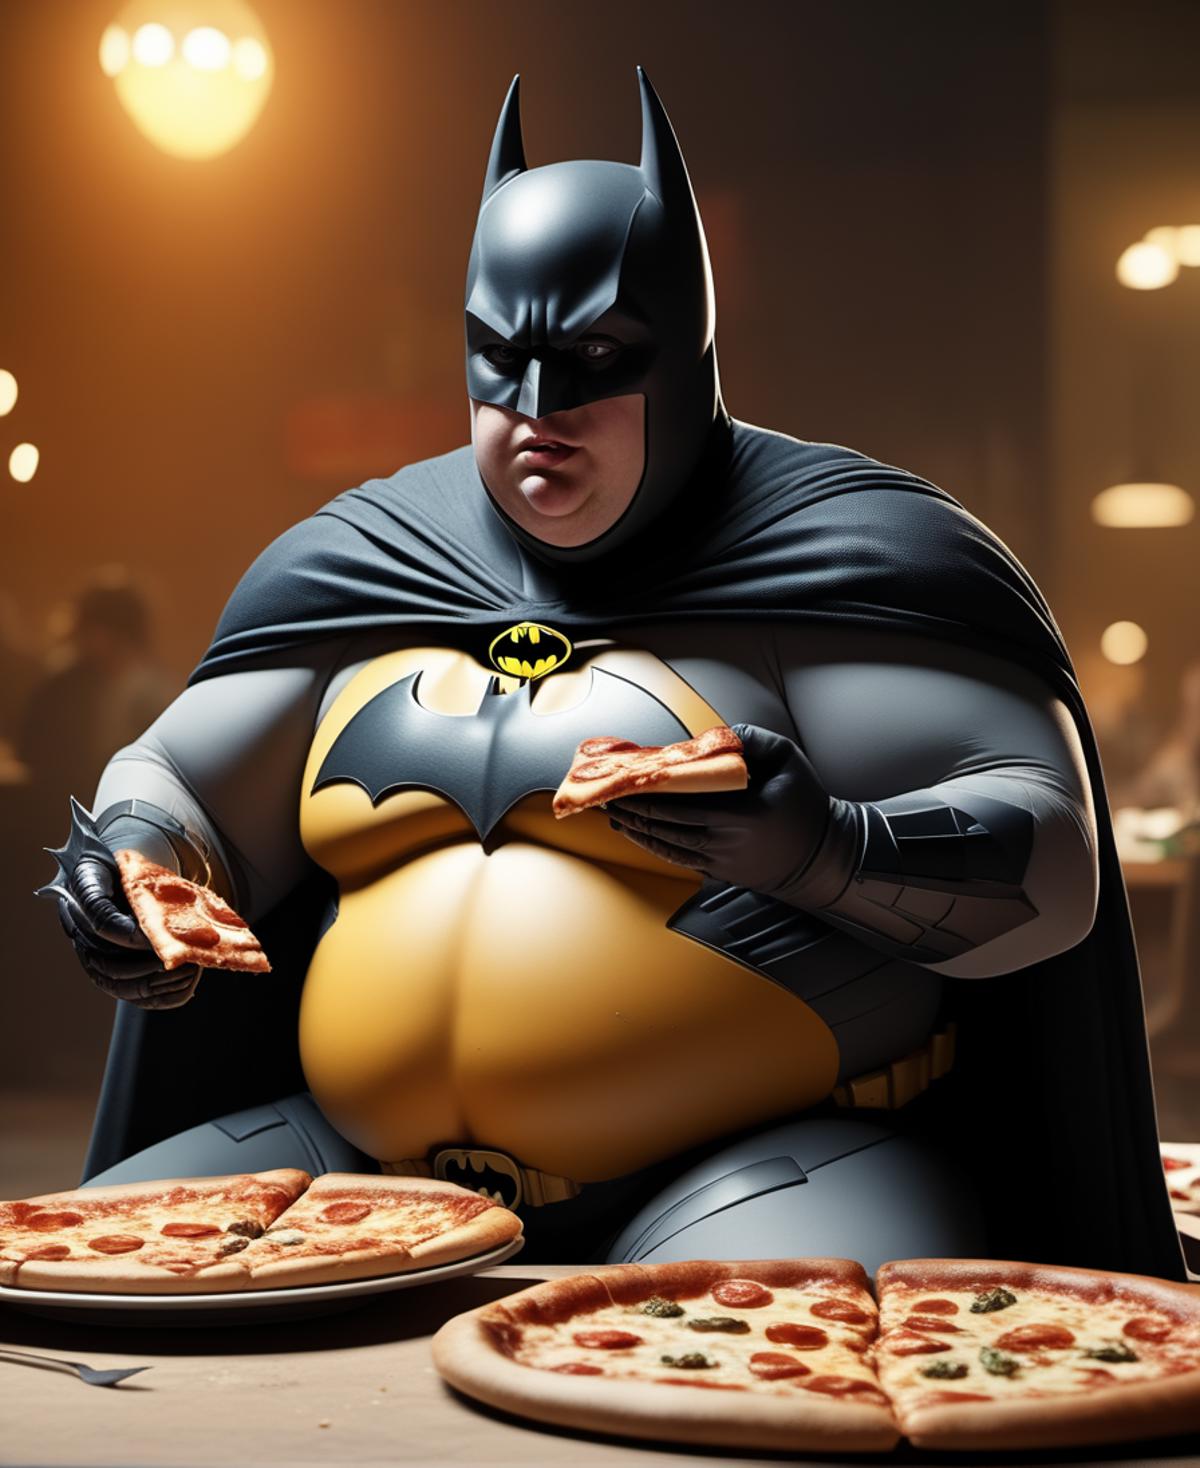 Fat Batman Eating Pizza: A Comical and Unusual Scene